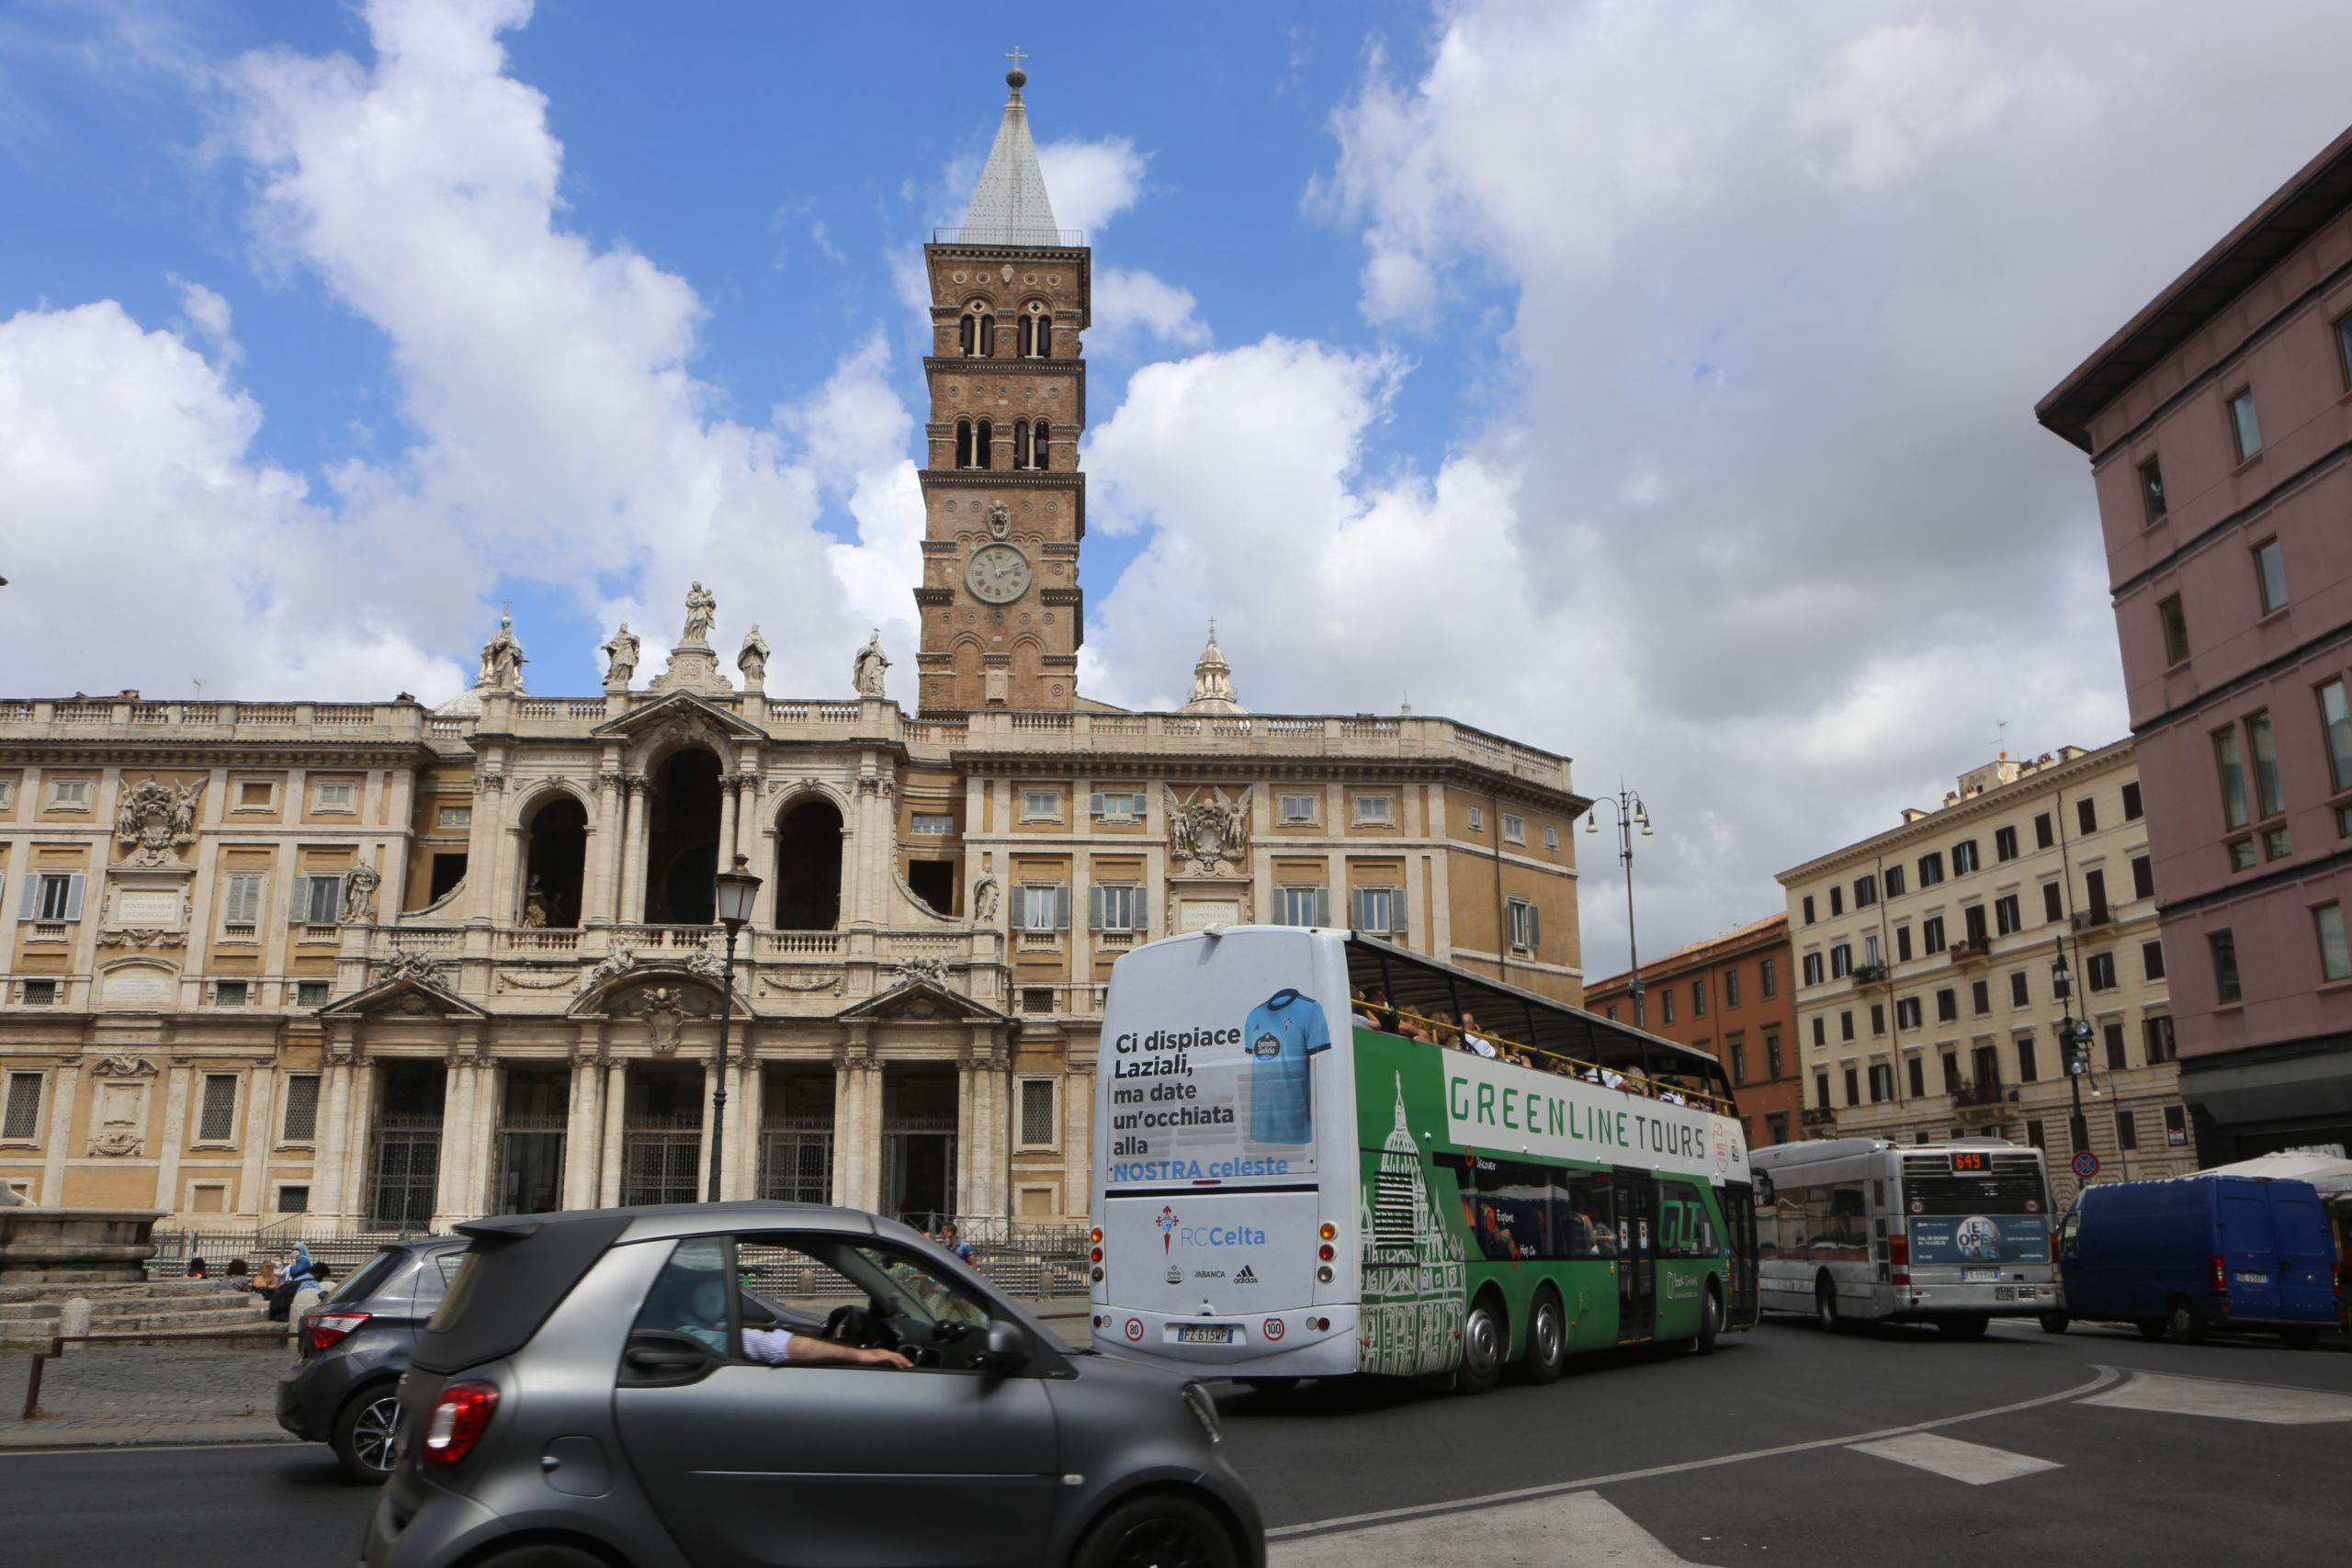 Rome sightseeing bus advertising